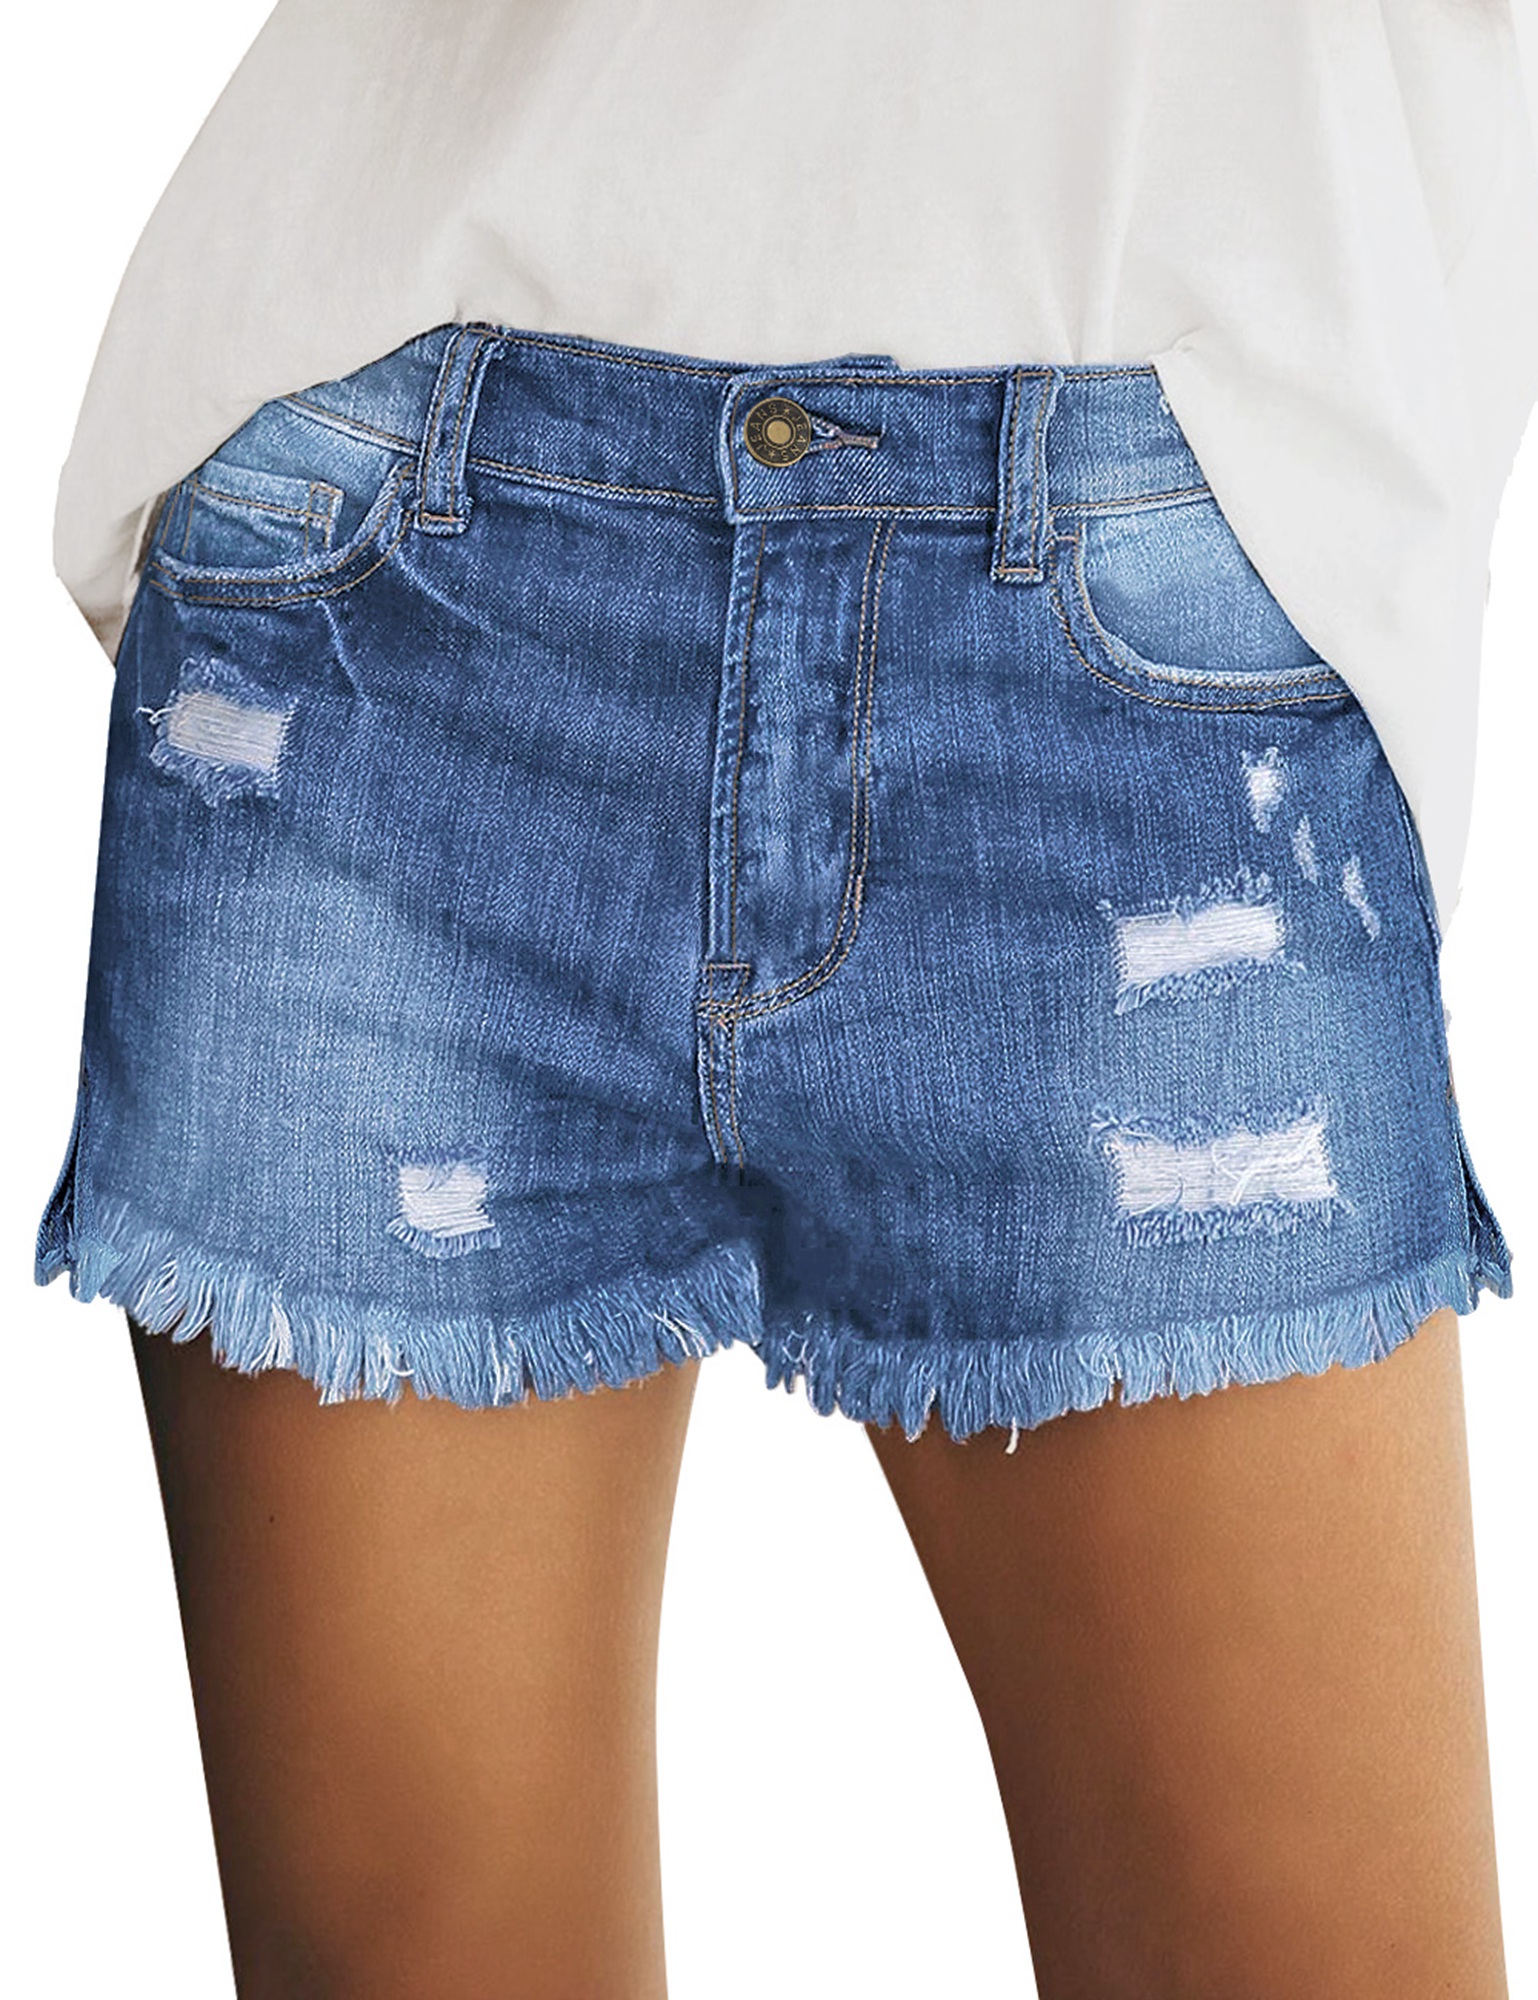 luvamia Women's Stylish Mid Rise Jean Shorts Ripped Stretchy Denim Shorts Bay Blue Size 2XL - image 1 of 7